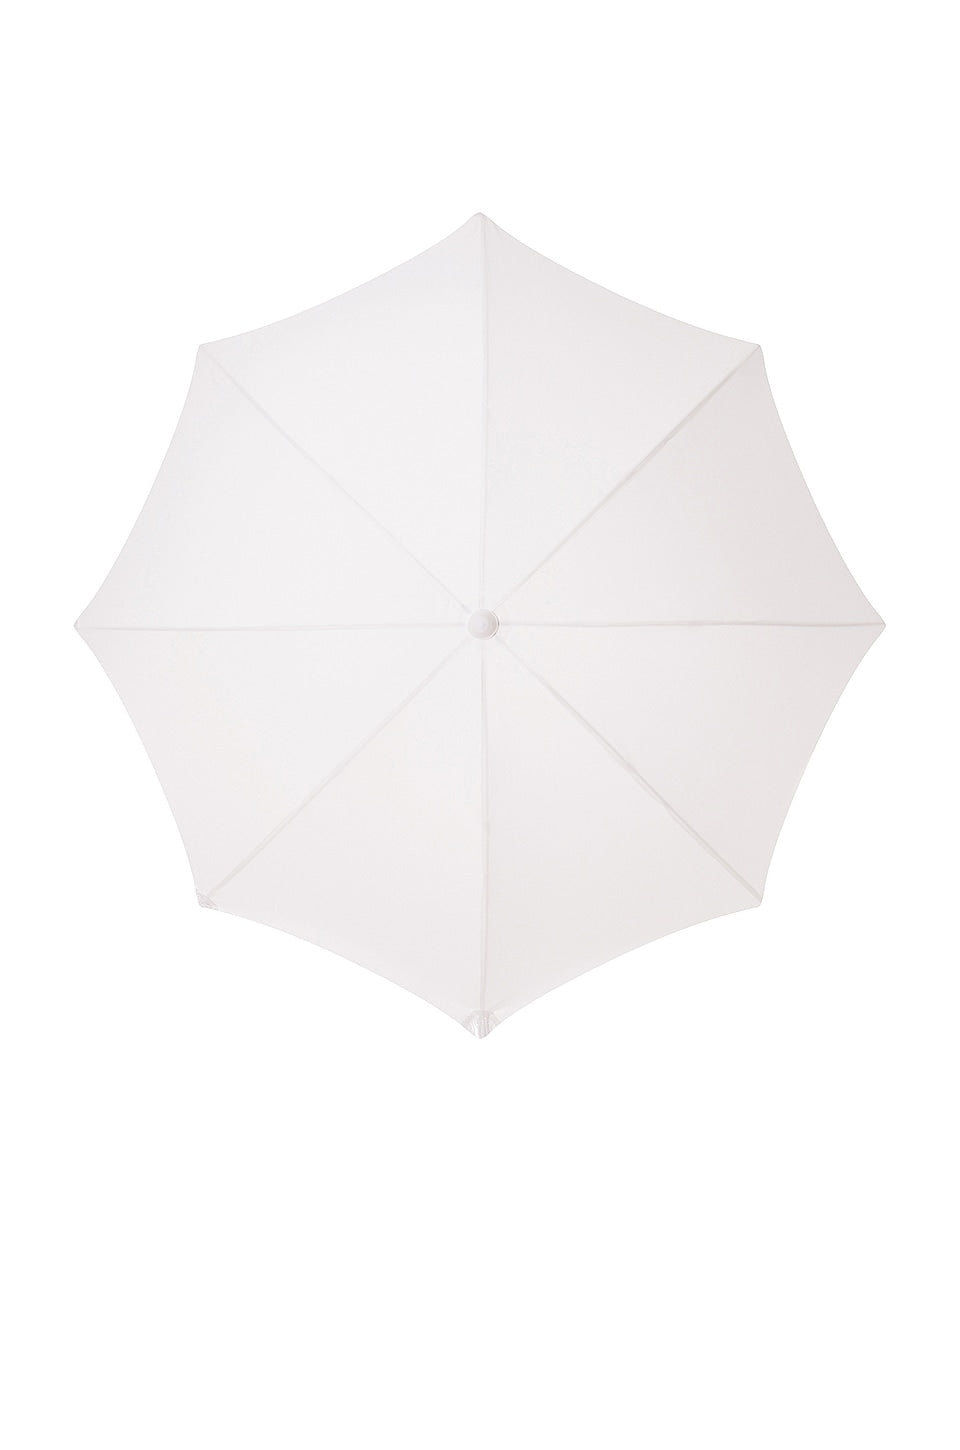 business & pleasure co. Holiday Beach Umbrella In Antique White